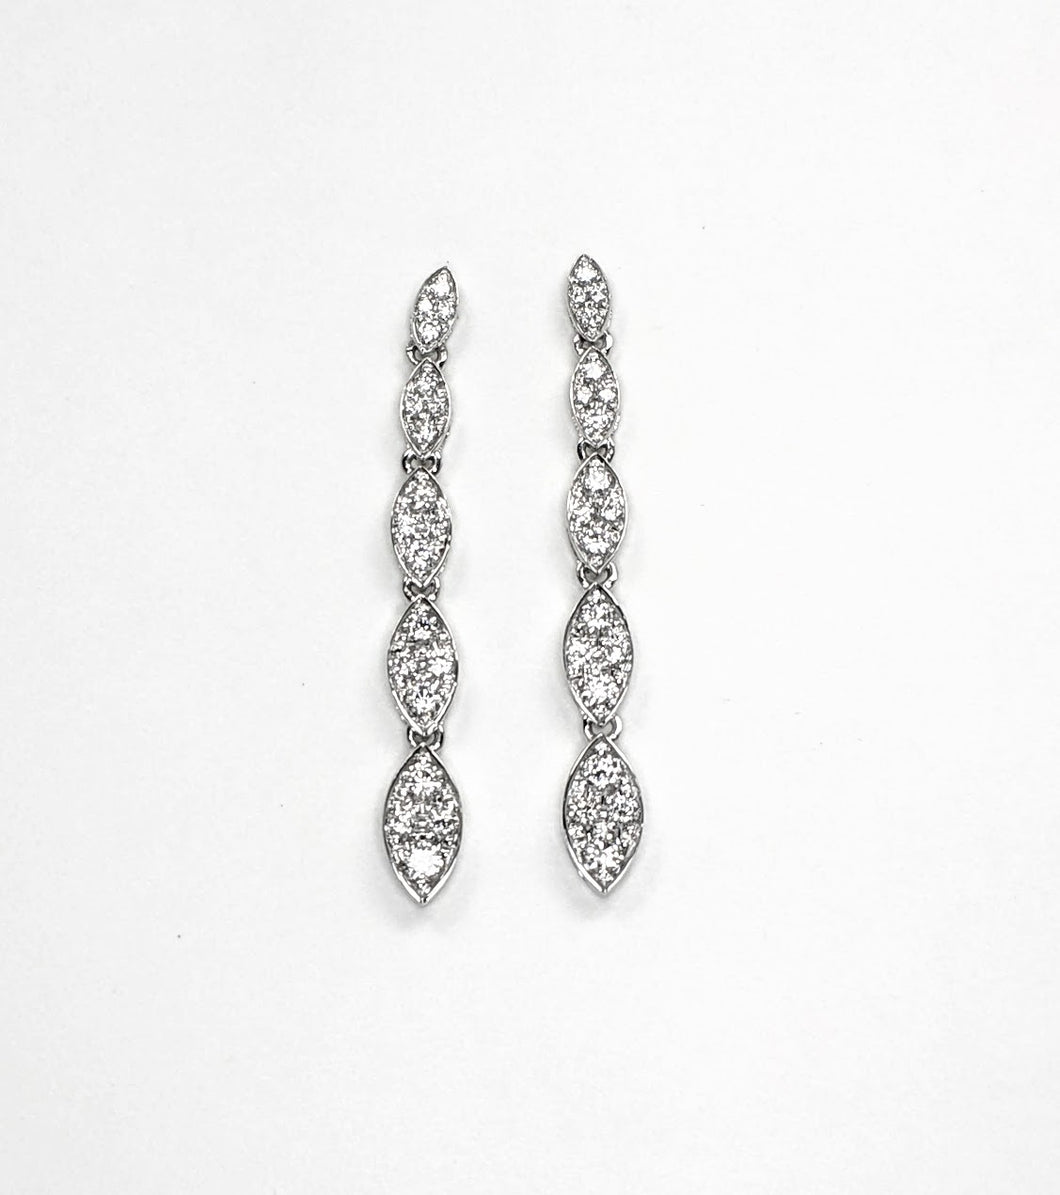 Diamond Dangle Earrings 1/2 Carat